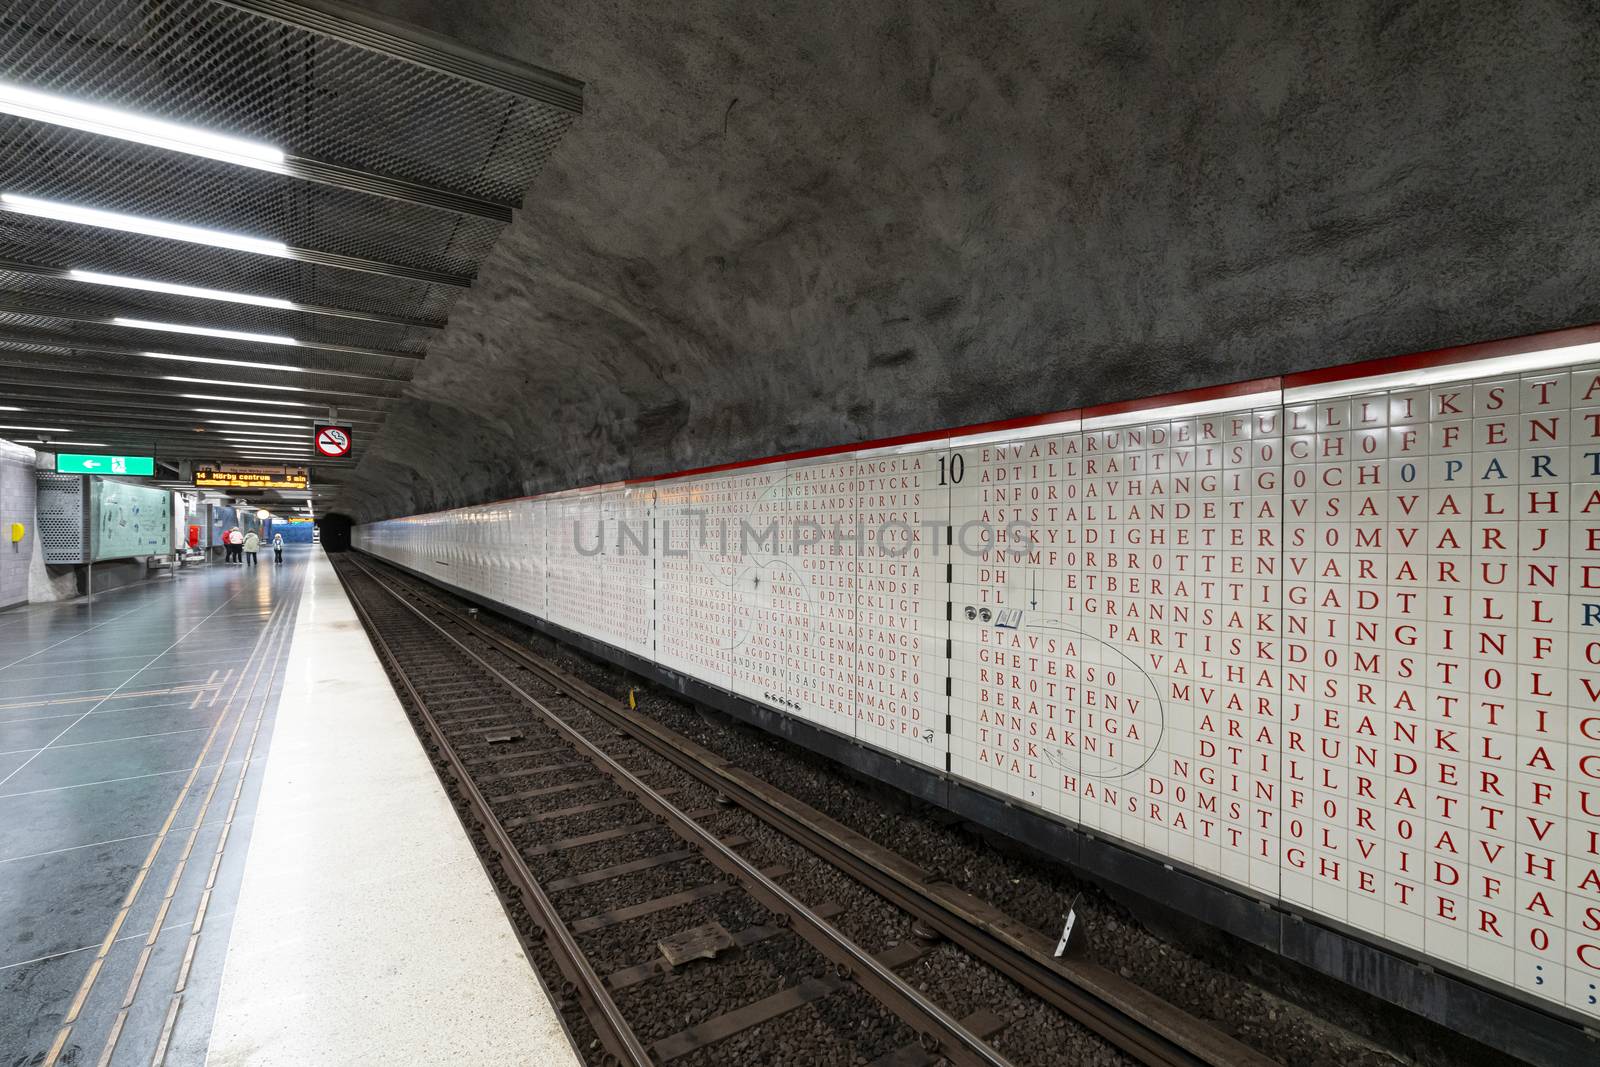 Universitetet  Metro Station in Stockholm by sergiodv